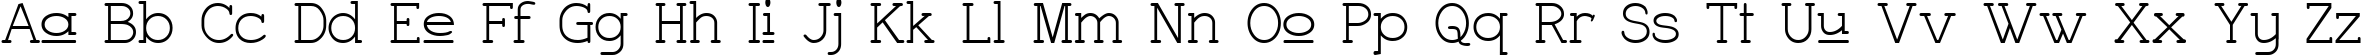 Пример написания английского алфавита шрифтом Charrington Upper